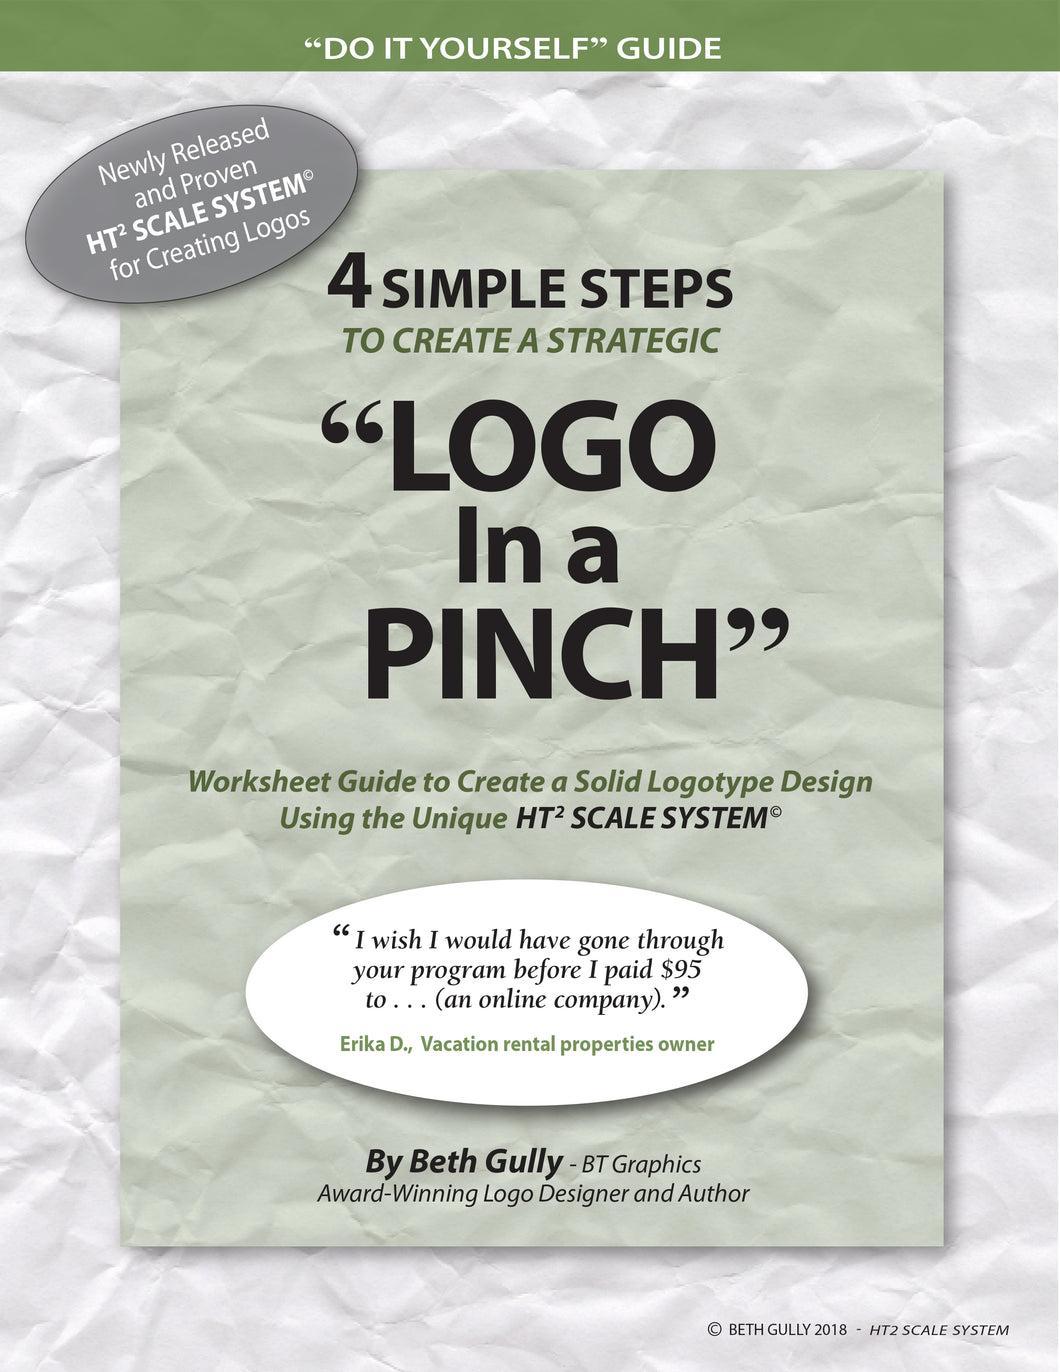 LOGO - 4 Simple Steps to Create a Strategic 